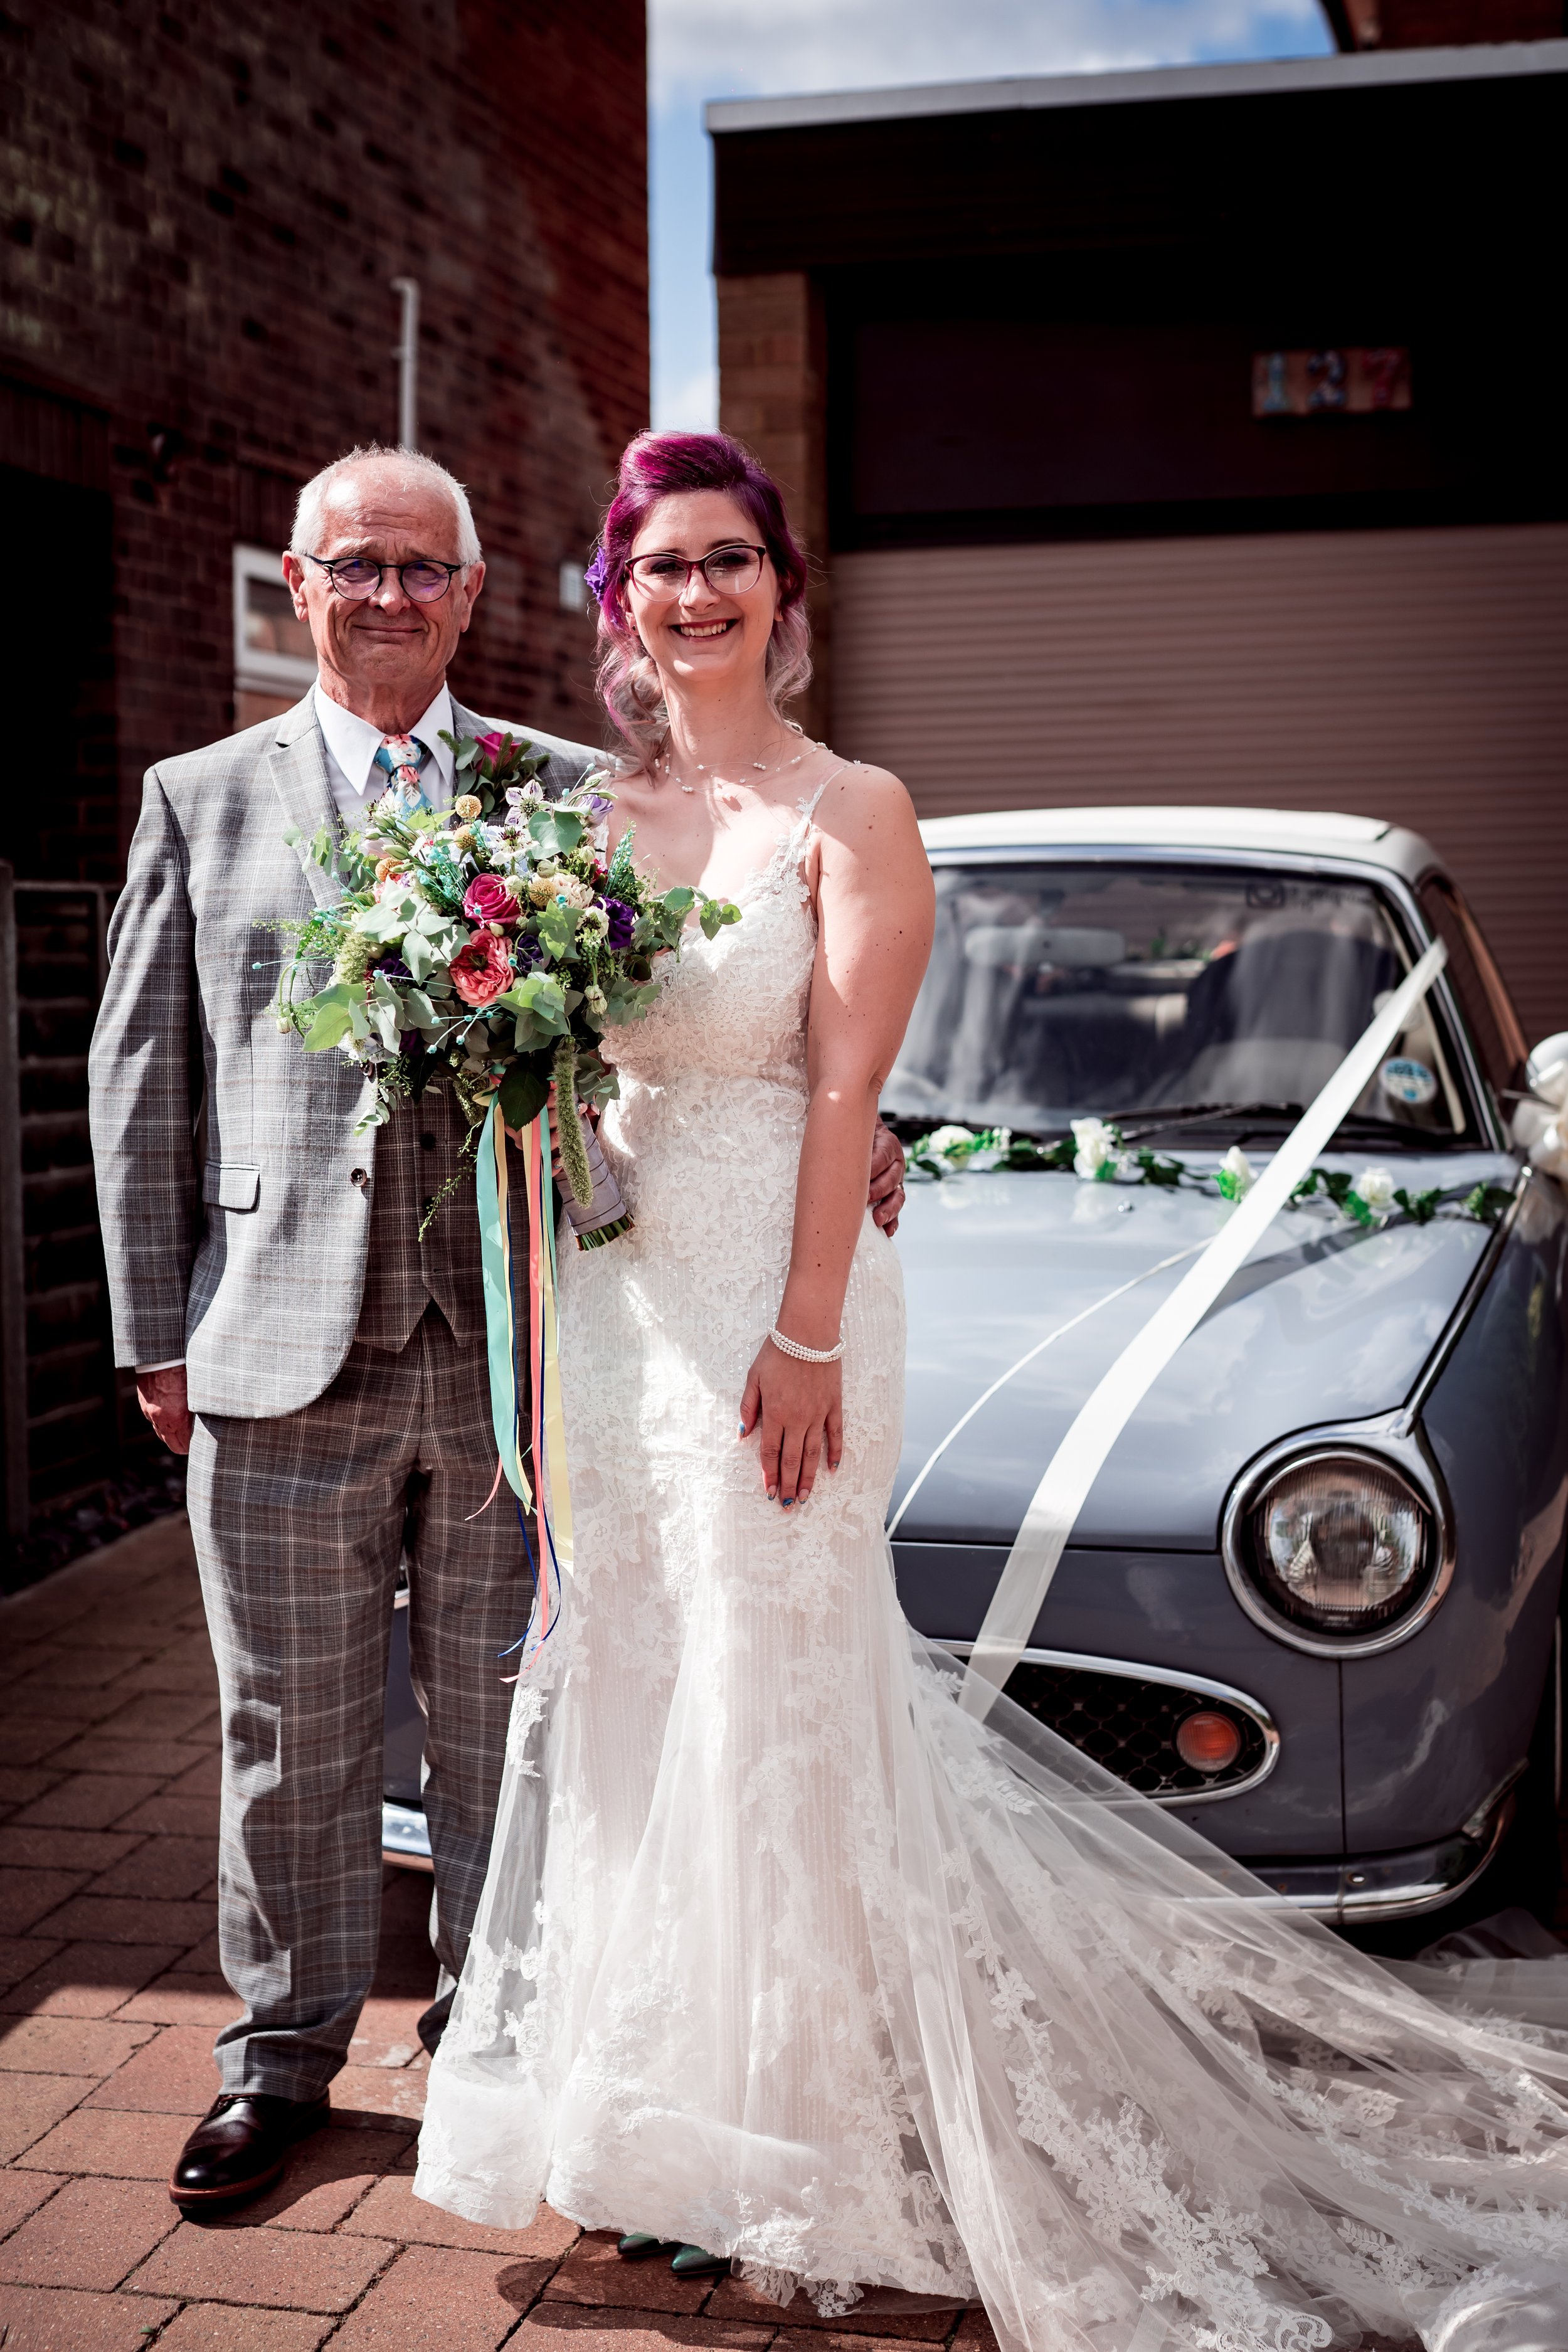 Walker_McCabe Wedding_Photographer Ashtree_Farm Market_Harborough Festival VW Colourful Wedding-11.jpg